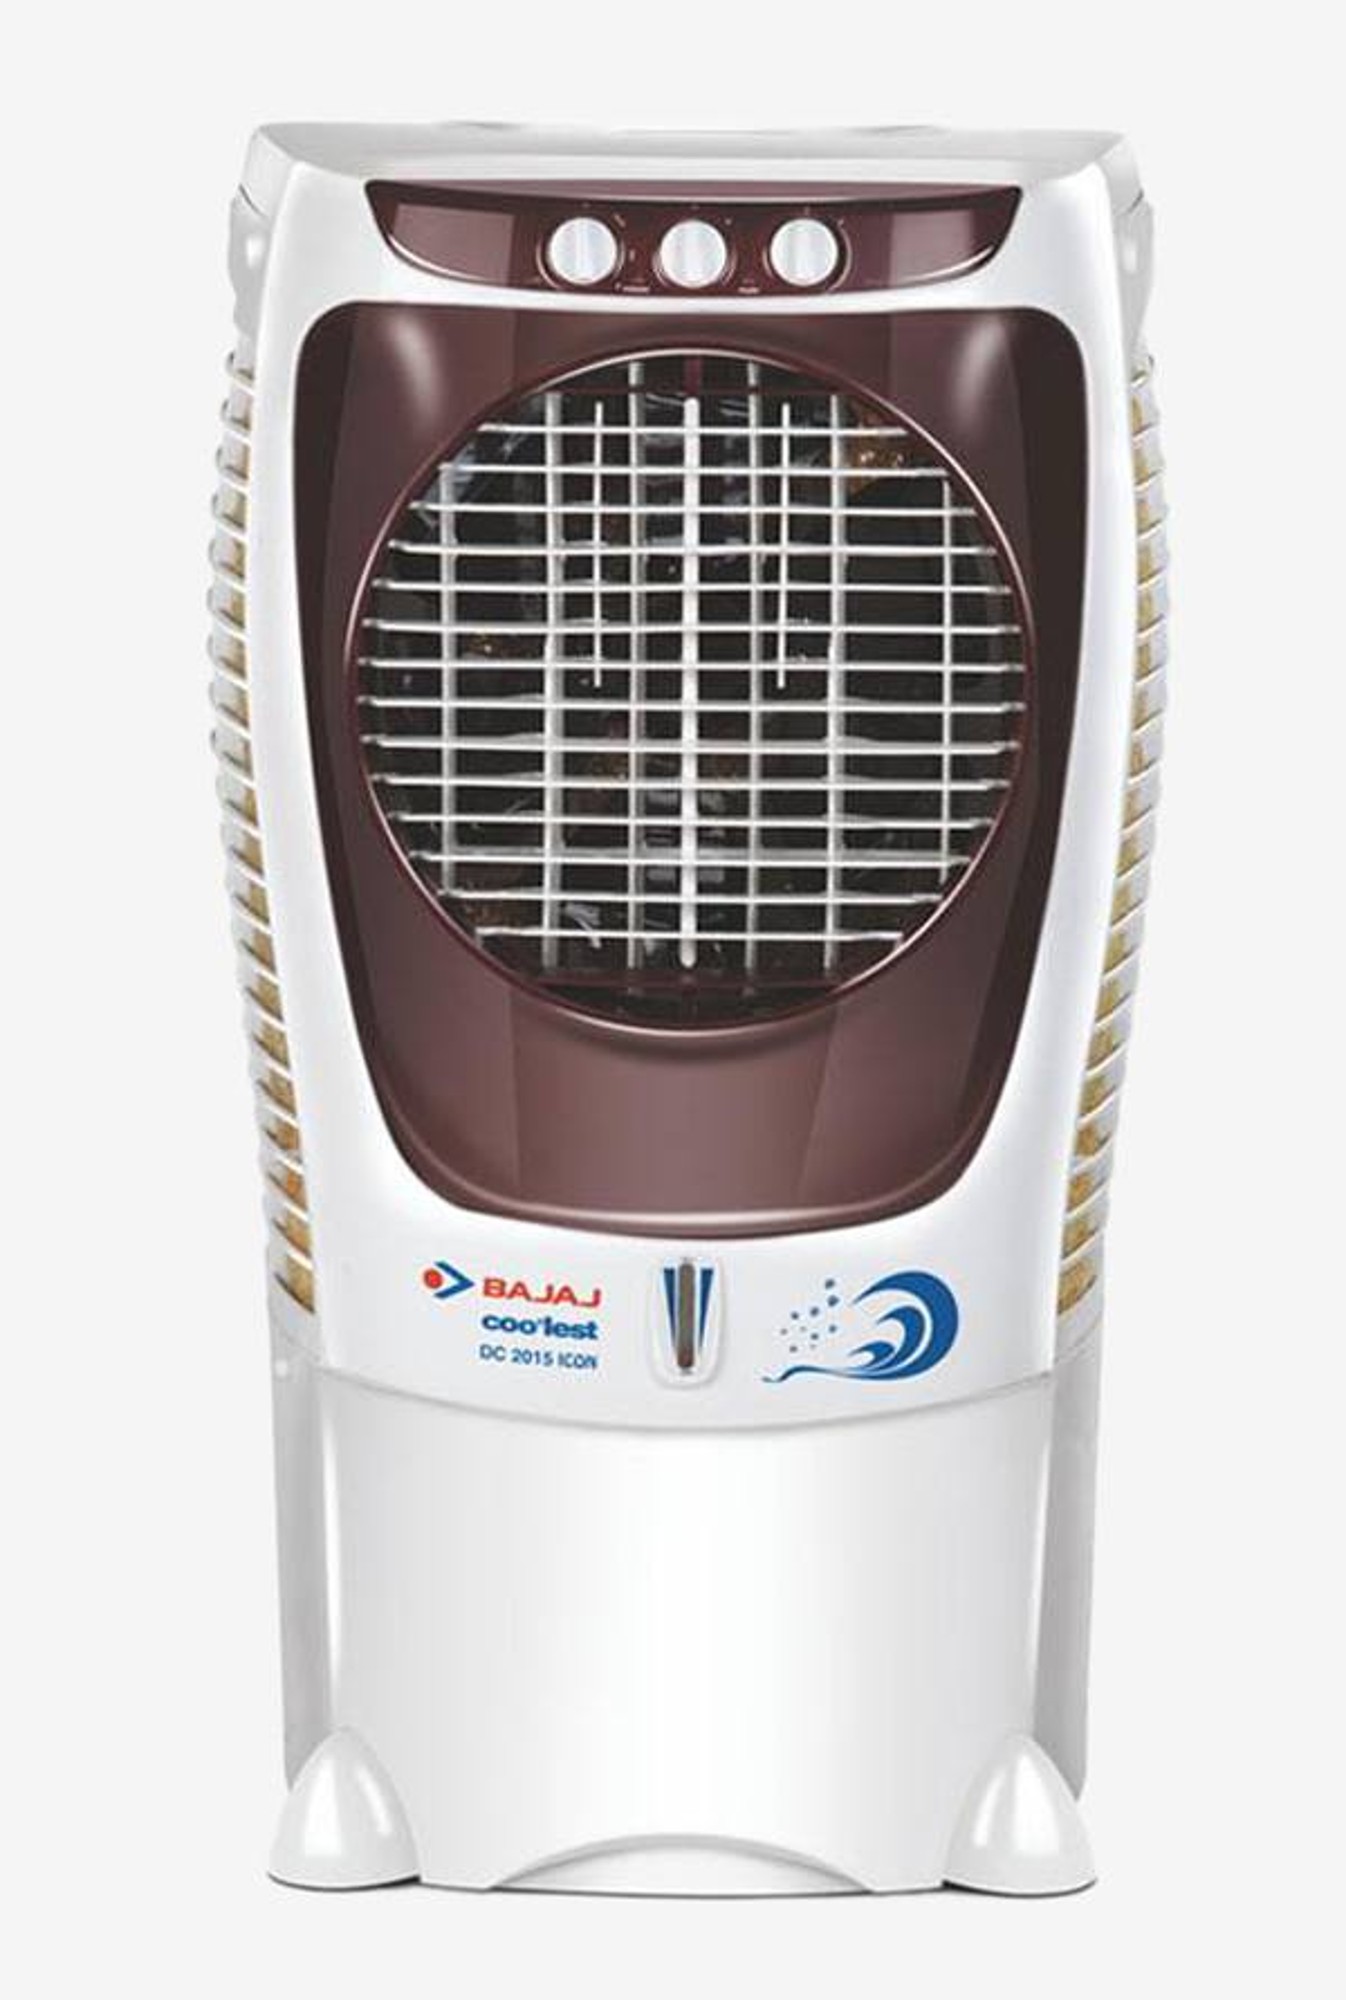 For 7994/-(33% Off) Bajaj DC 2015 Icon 43 Litres Air Cooler (White) at TATA CLiQ